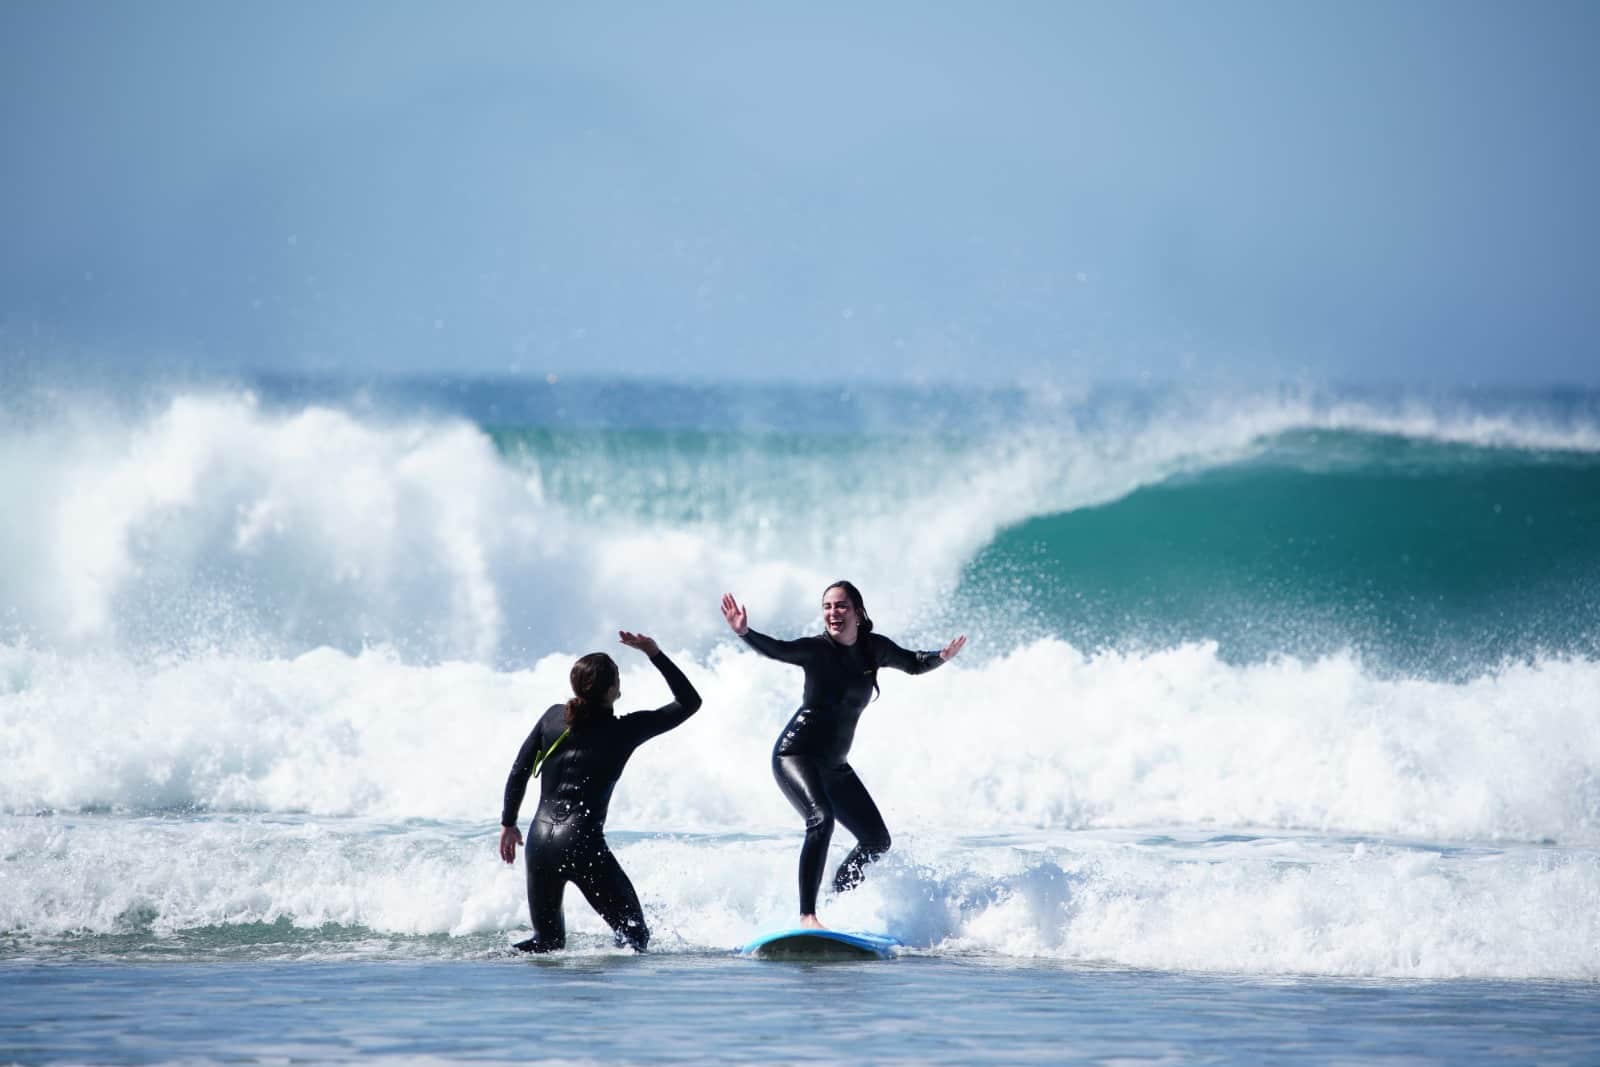 Clases de surf en Nemiña, Galicia con “Aldea Surf Camp”🤙